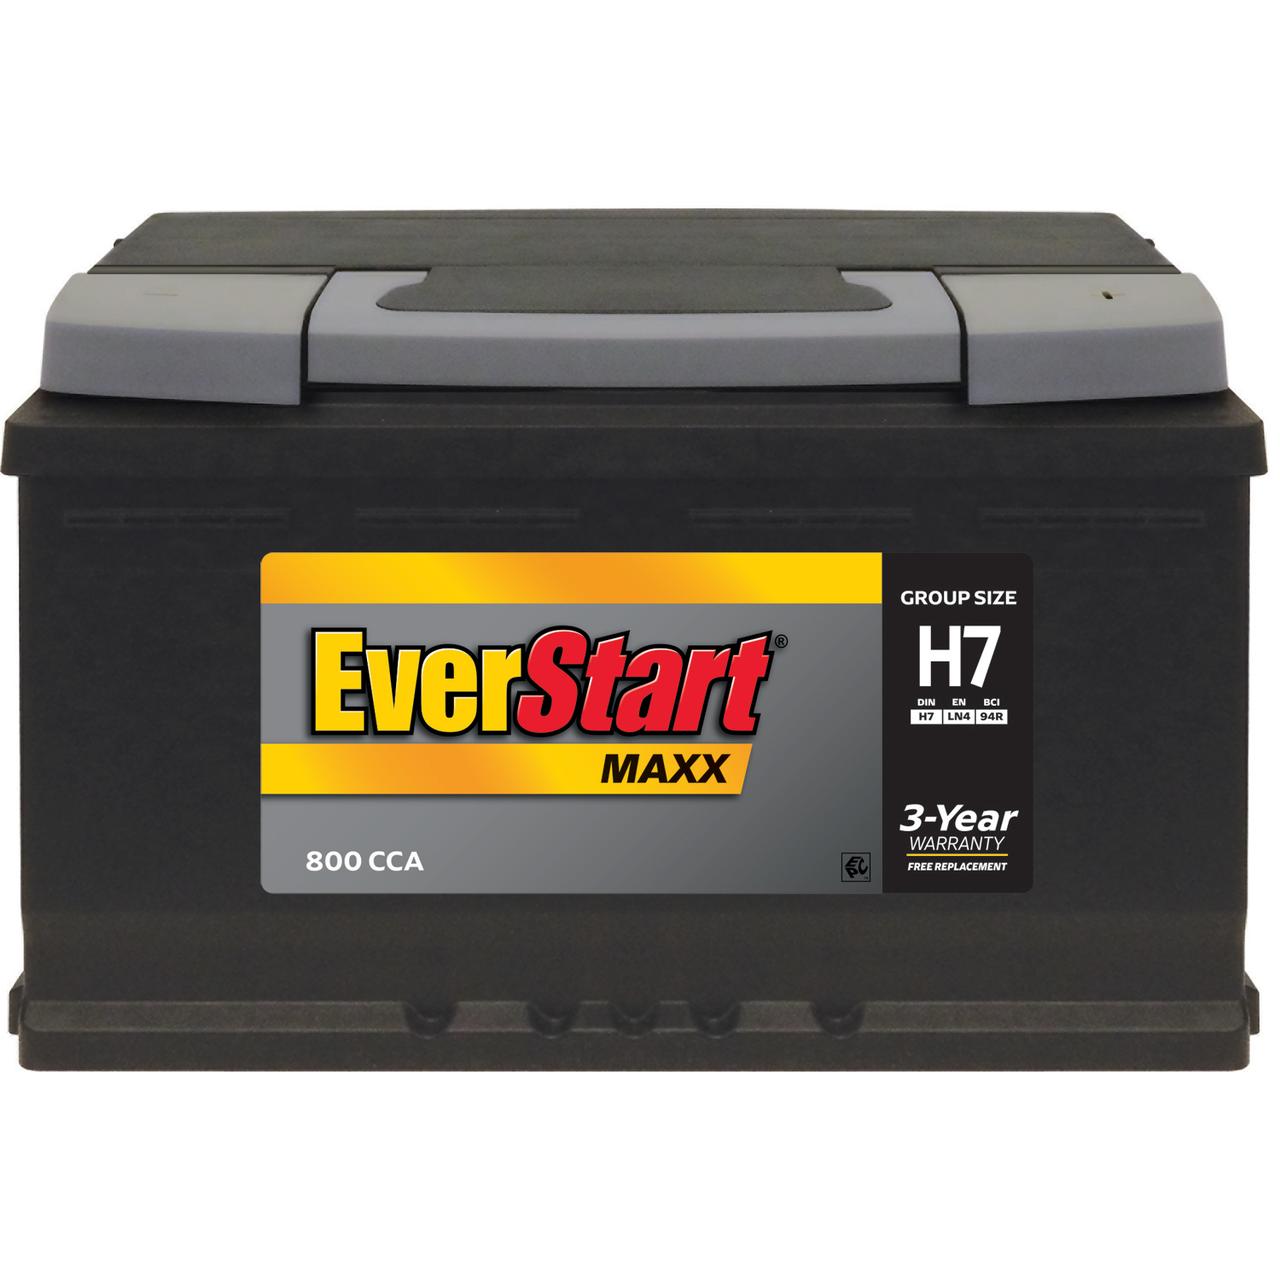 EverStart Maxx Lead Acid Automotive Battery, Group Size H7 / LN4 / 94R 12 Volt, 800 CCA - image 3 of 7